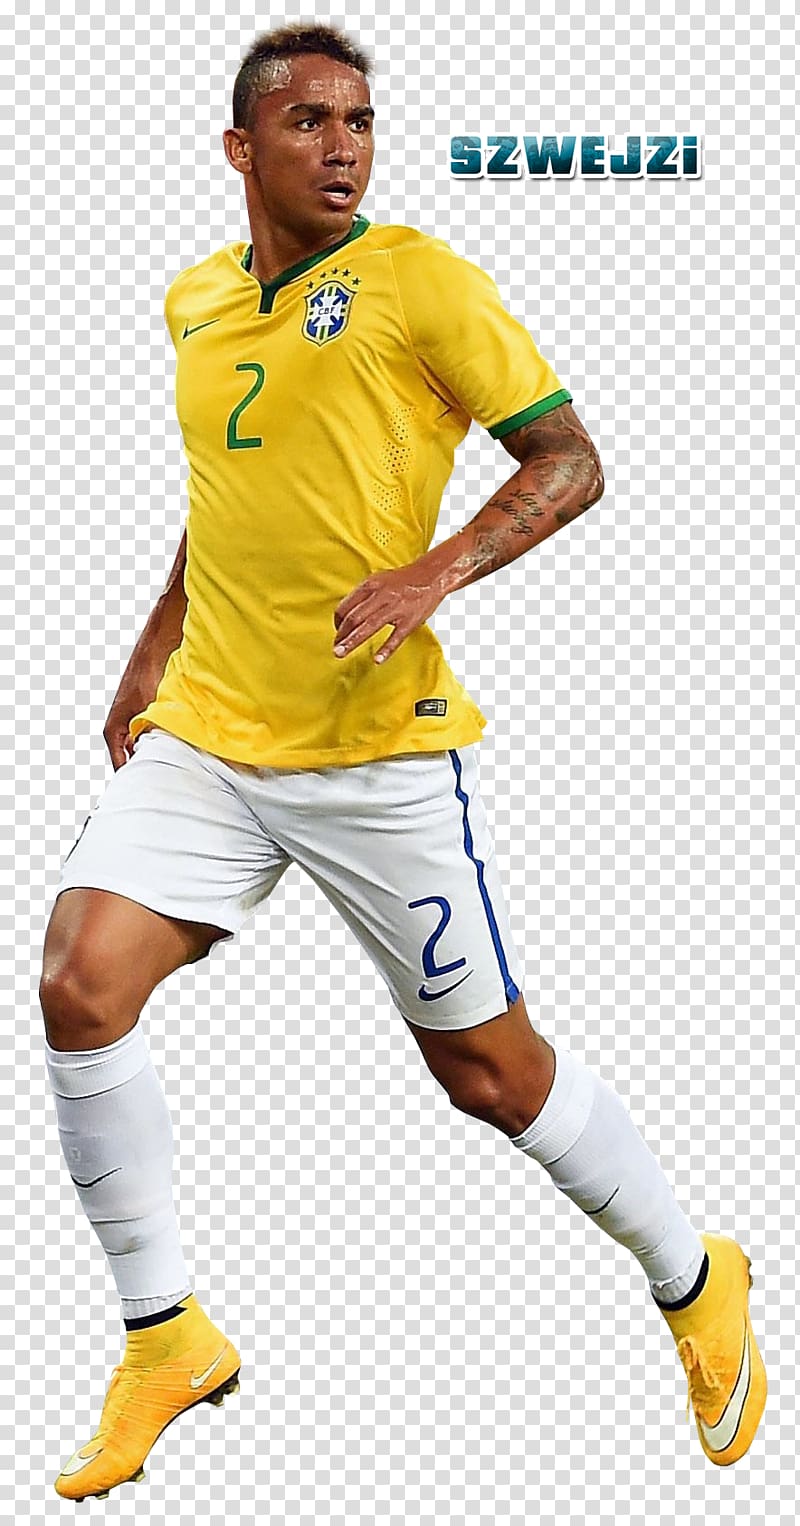 Danilo Soccer player Football Team sport, danilo transparent background PNG clipart